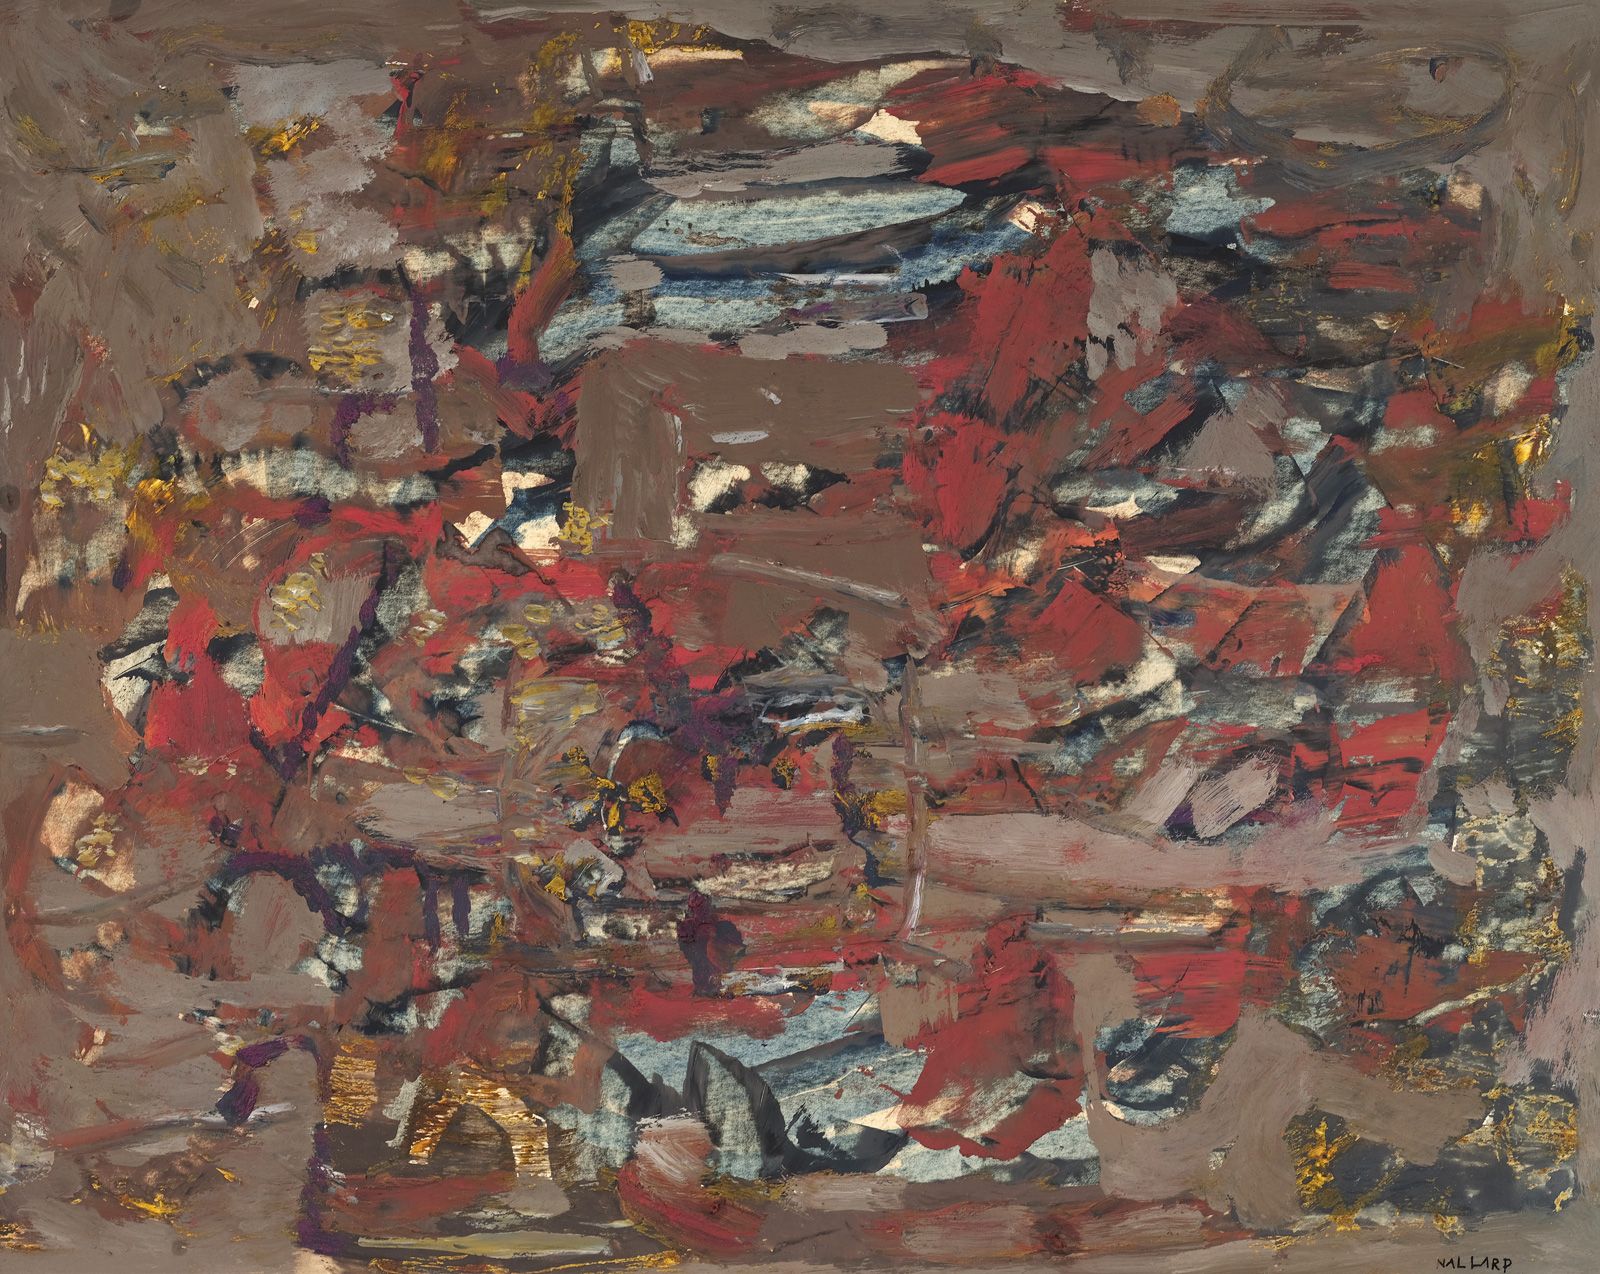 Null 路易斯-纳拉尔(1918-2016)

无题

纸上油画，右下方有签名。

44 x 53.5厘米